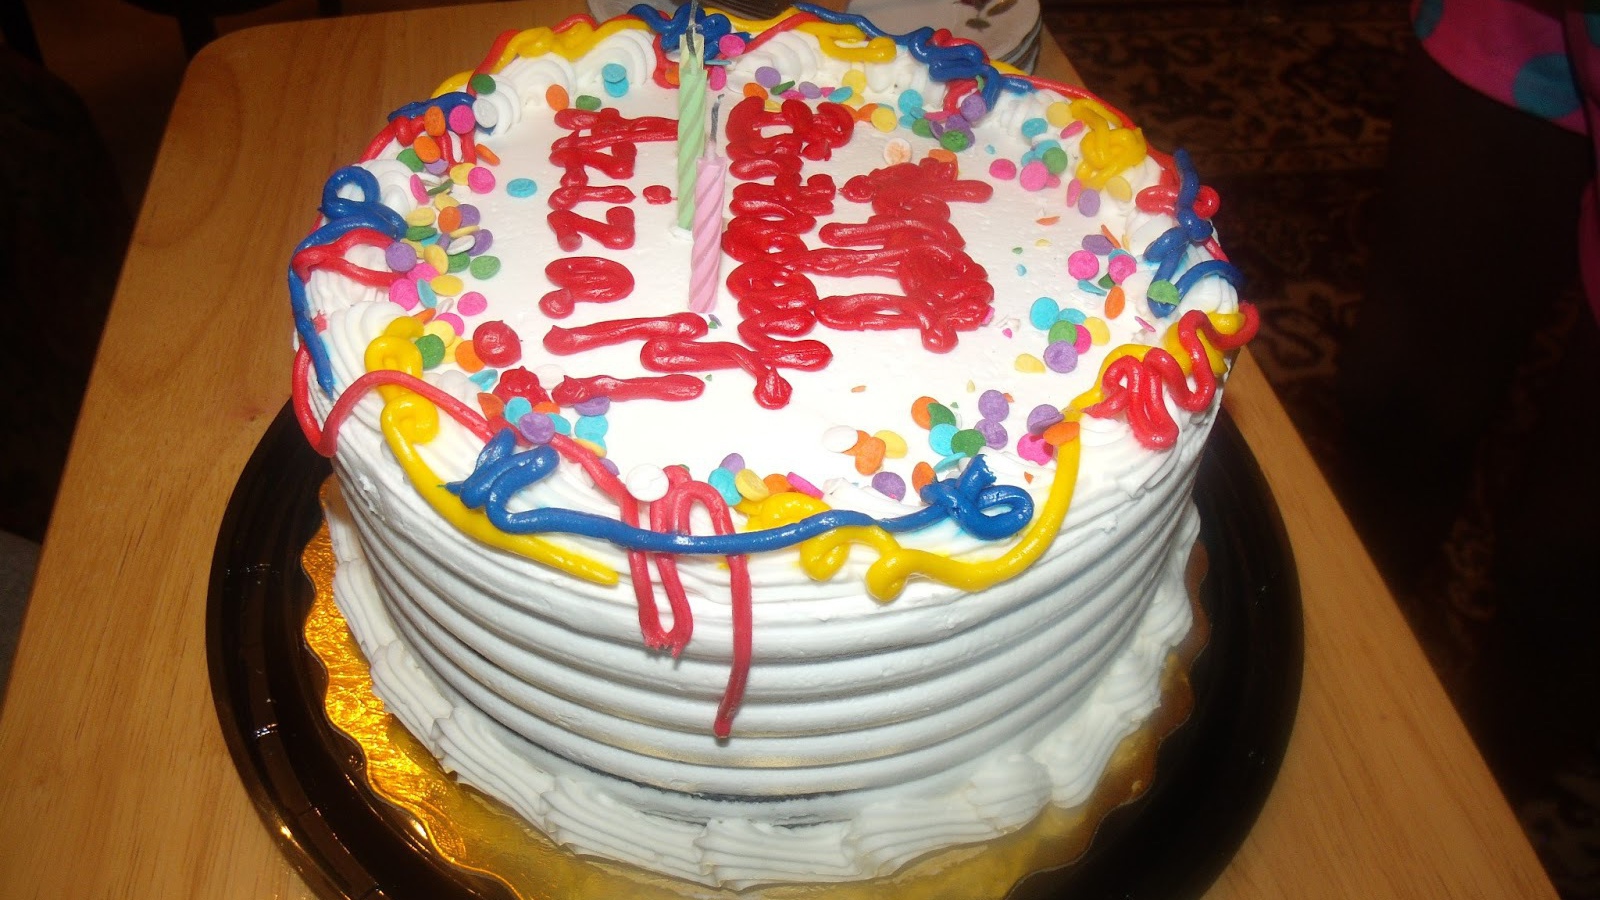 Amazing birthday cake